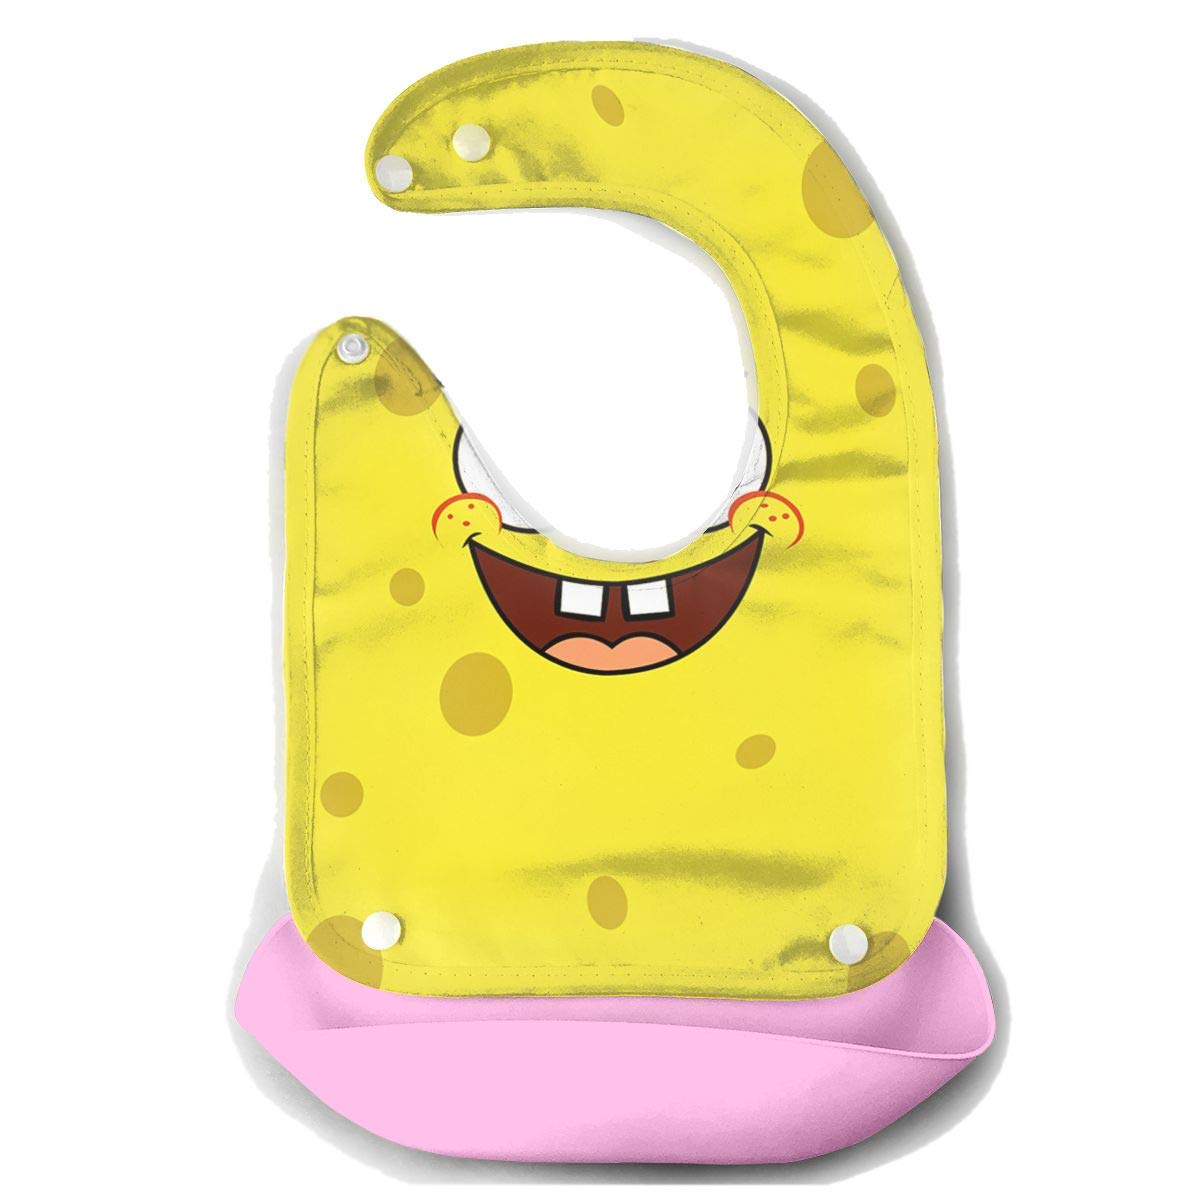 Sponge Bob - HD Wallpaper 